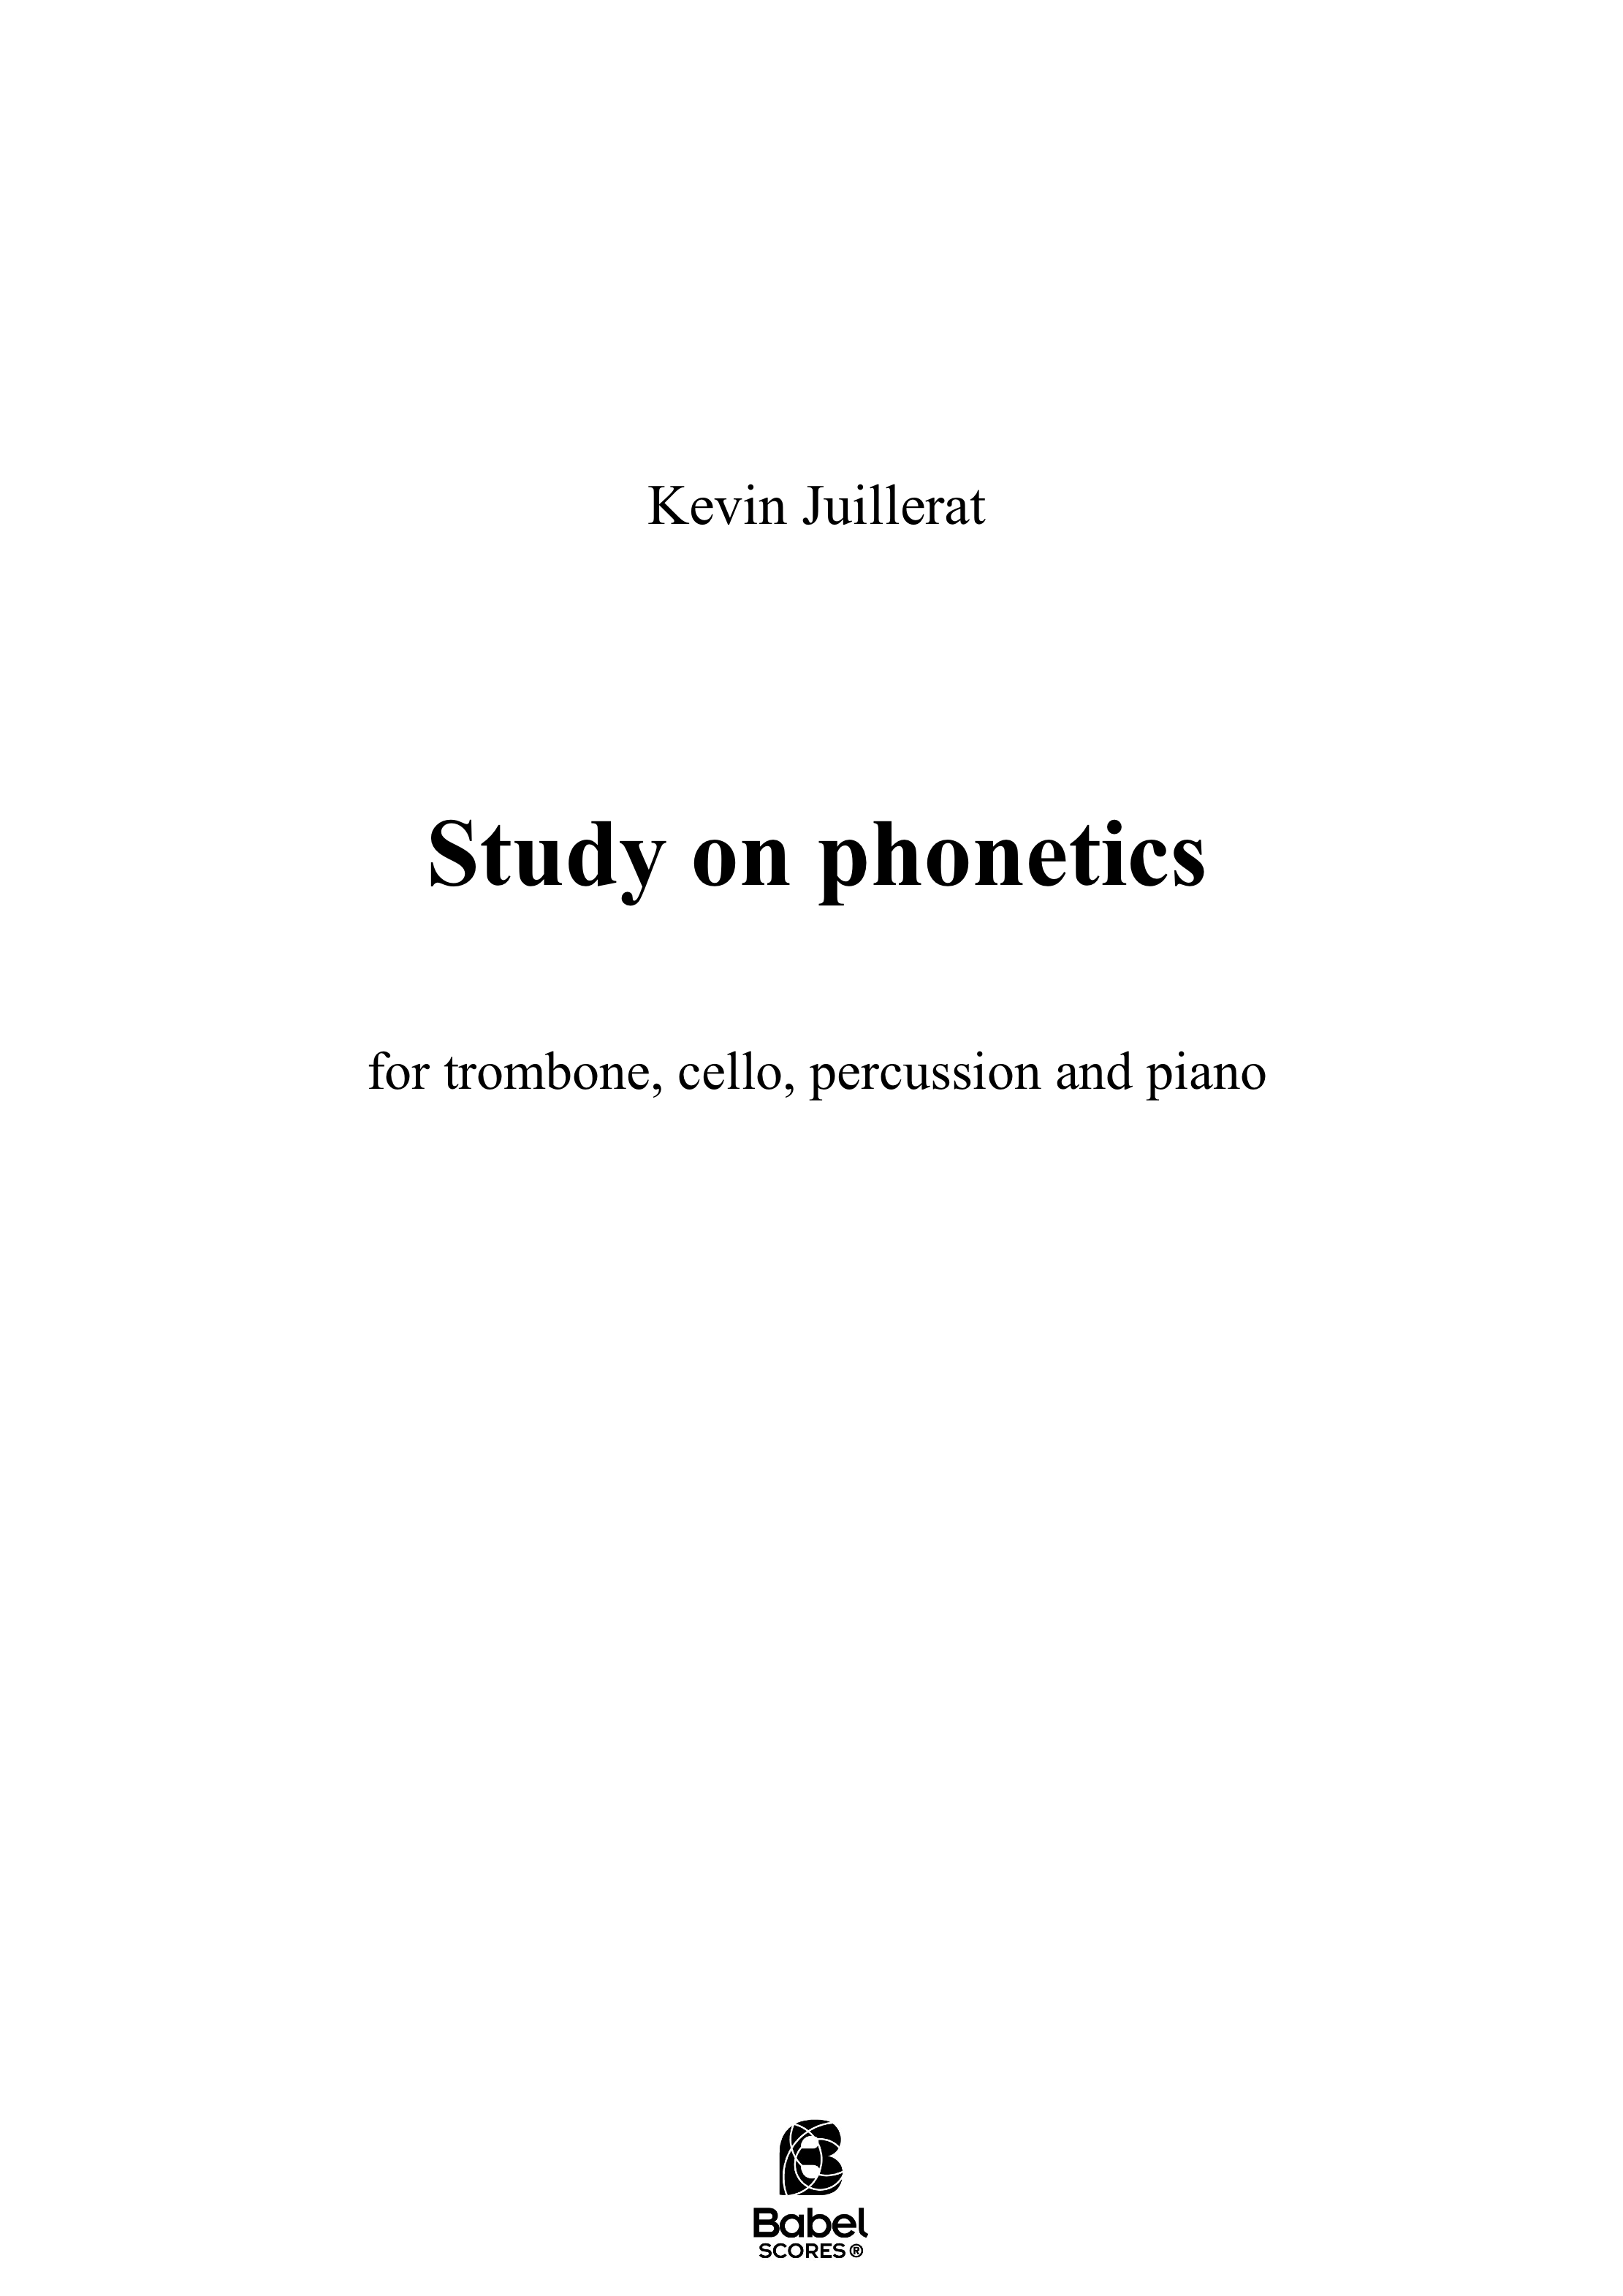 study on phonetics A3 z